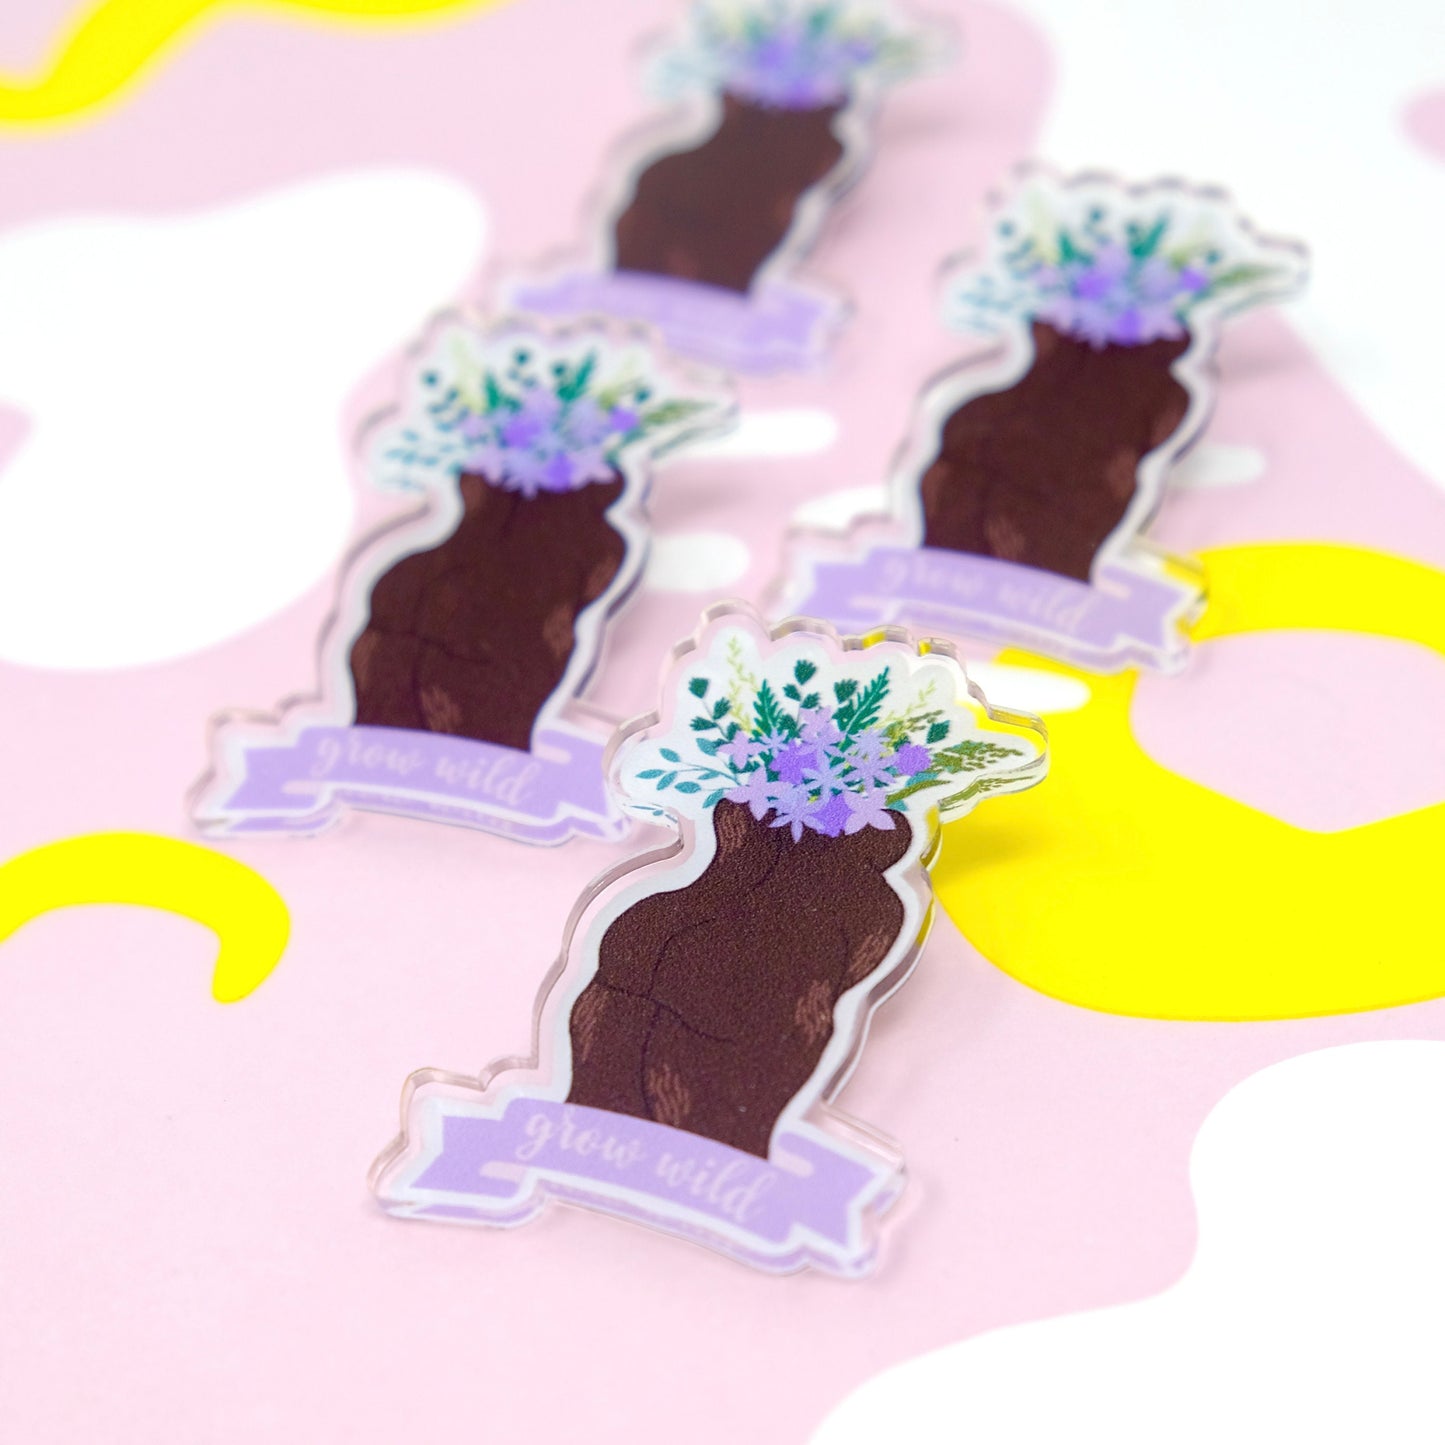 Grow Wild Acrylic Pin - Body Positive Acrylic Pin with Rubber Backing - Self Love Inspirational Pin